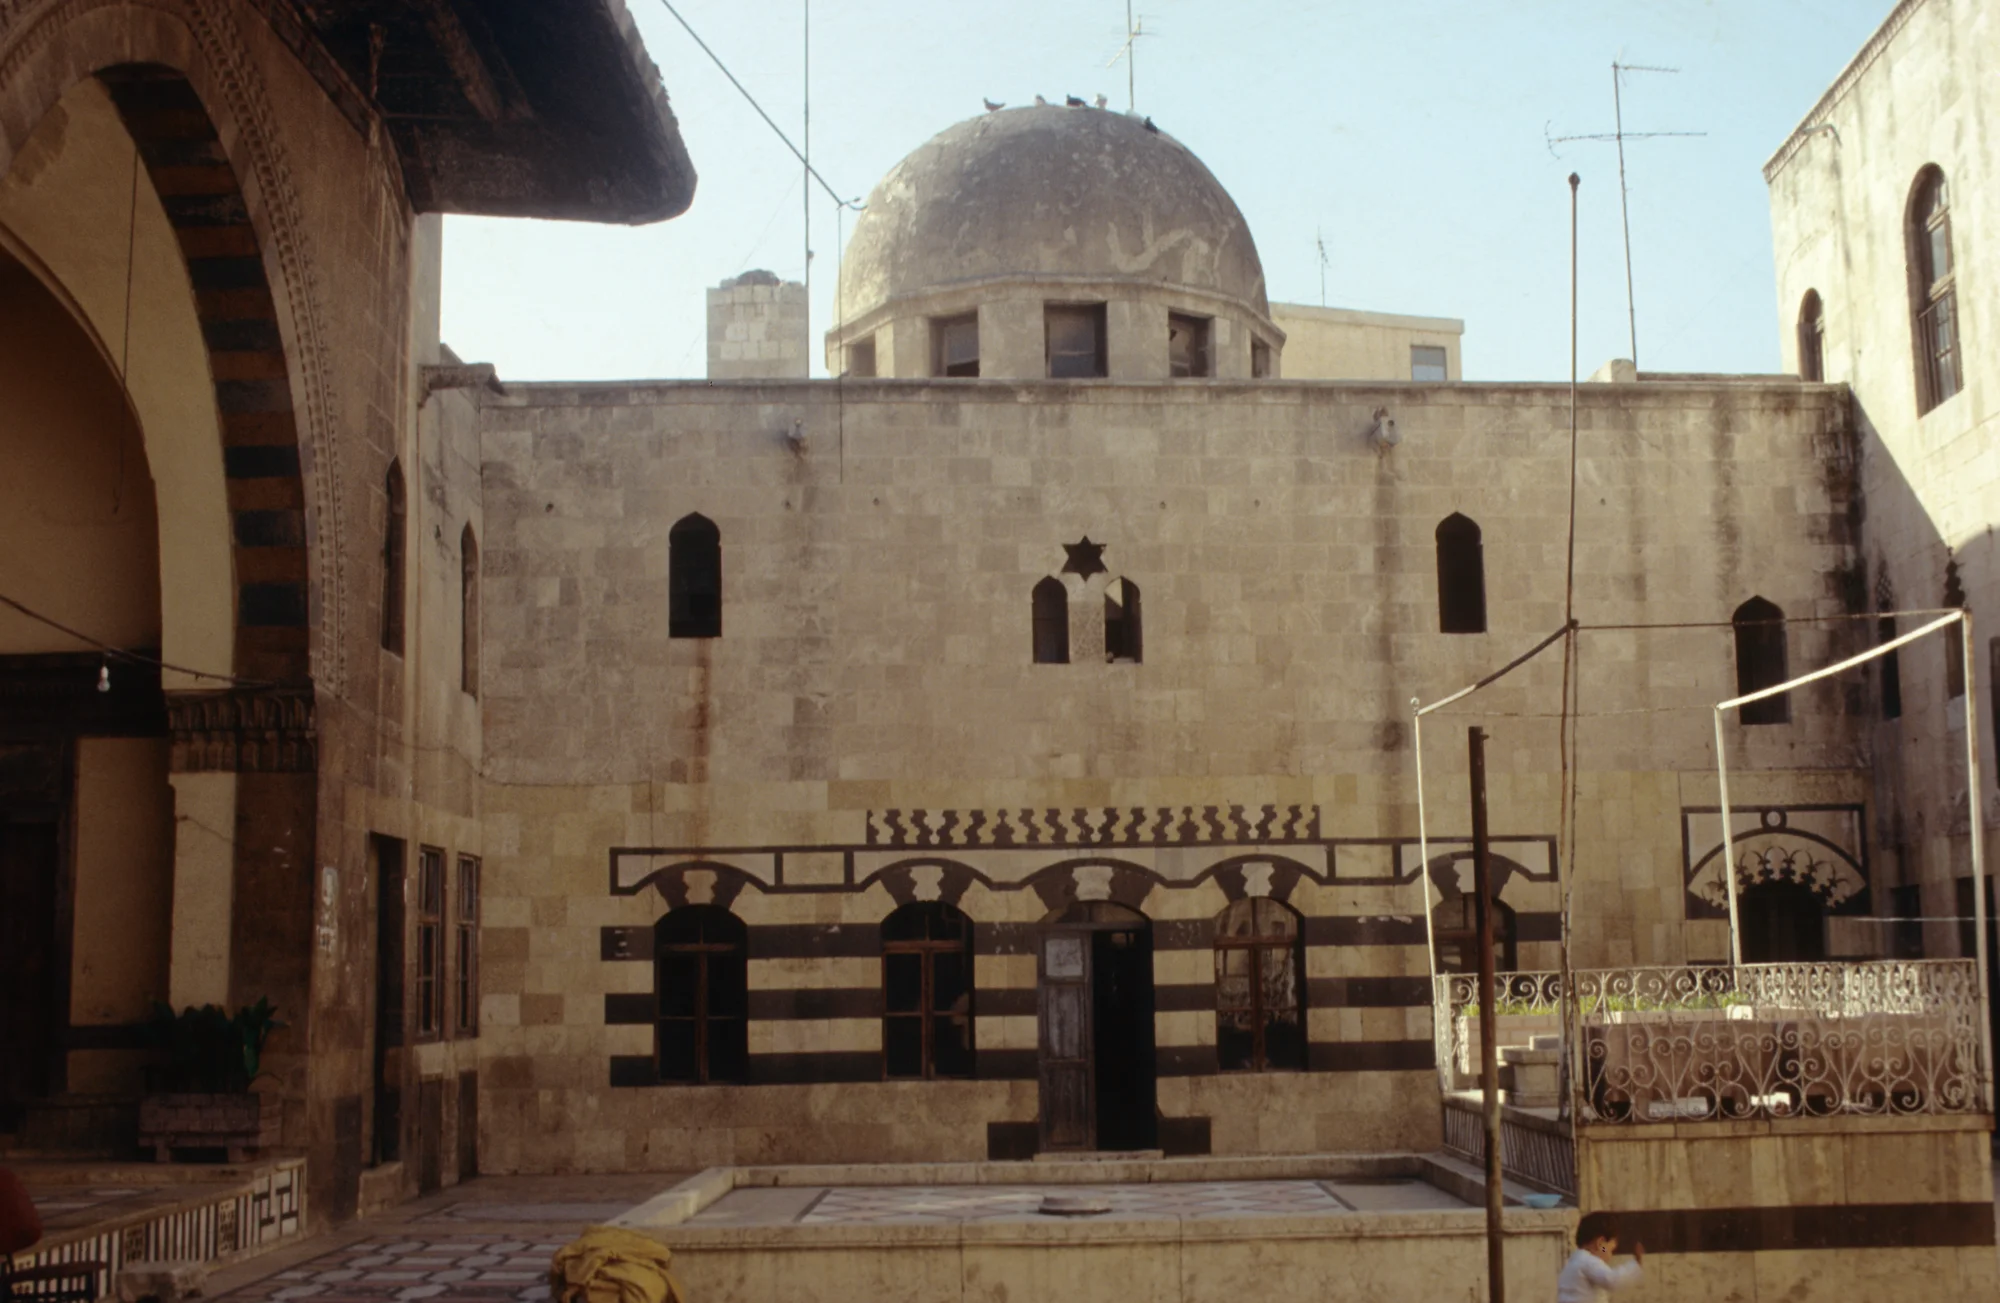 Bayt Ghazala, courtyard and western facade - the main hall facade